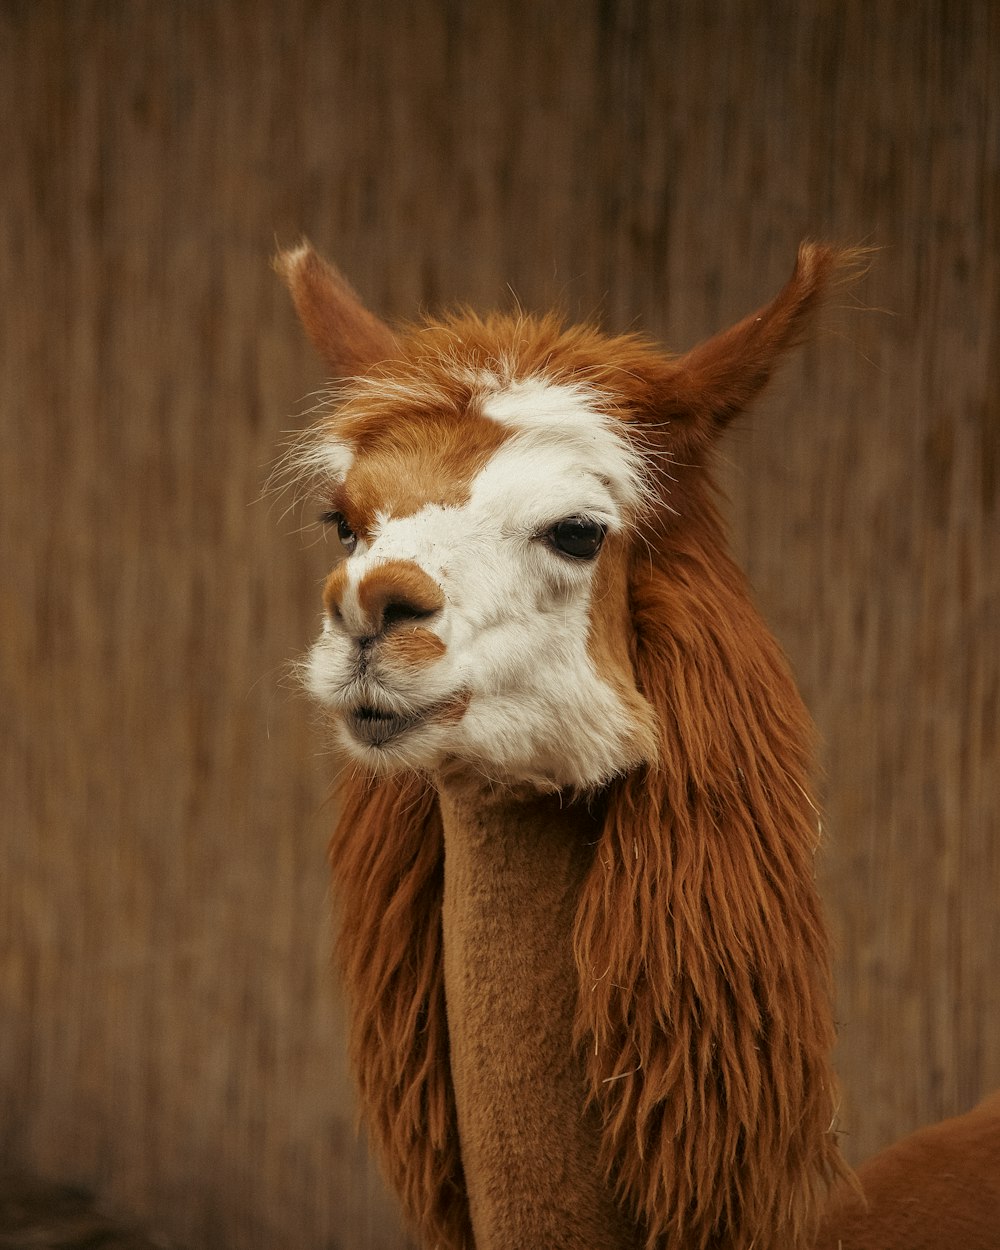 a close up of a llama with long hair